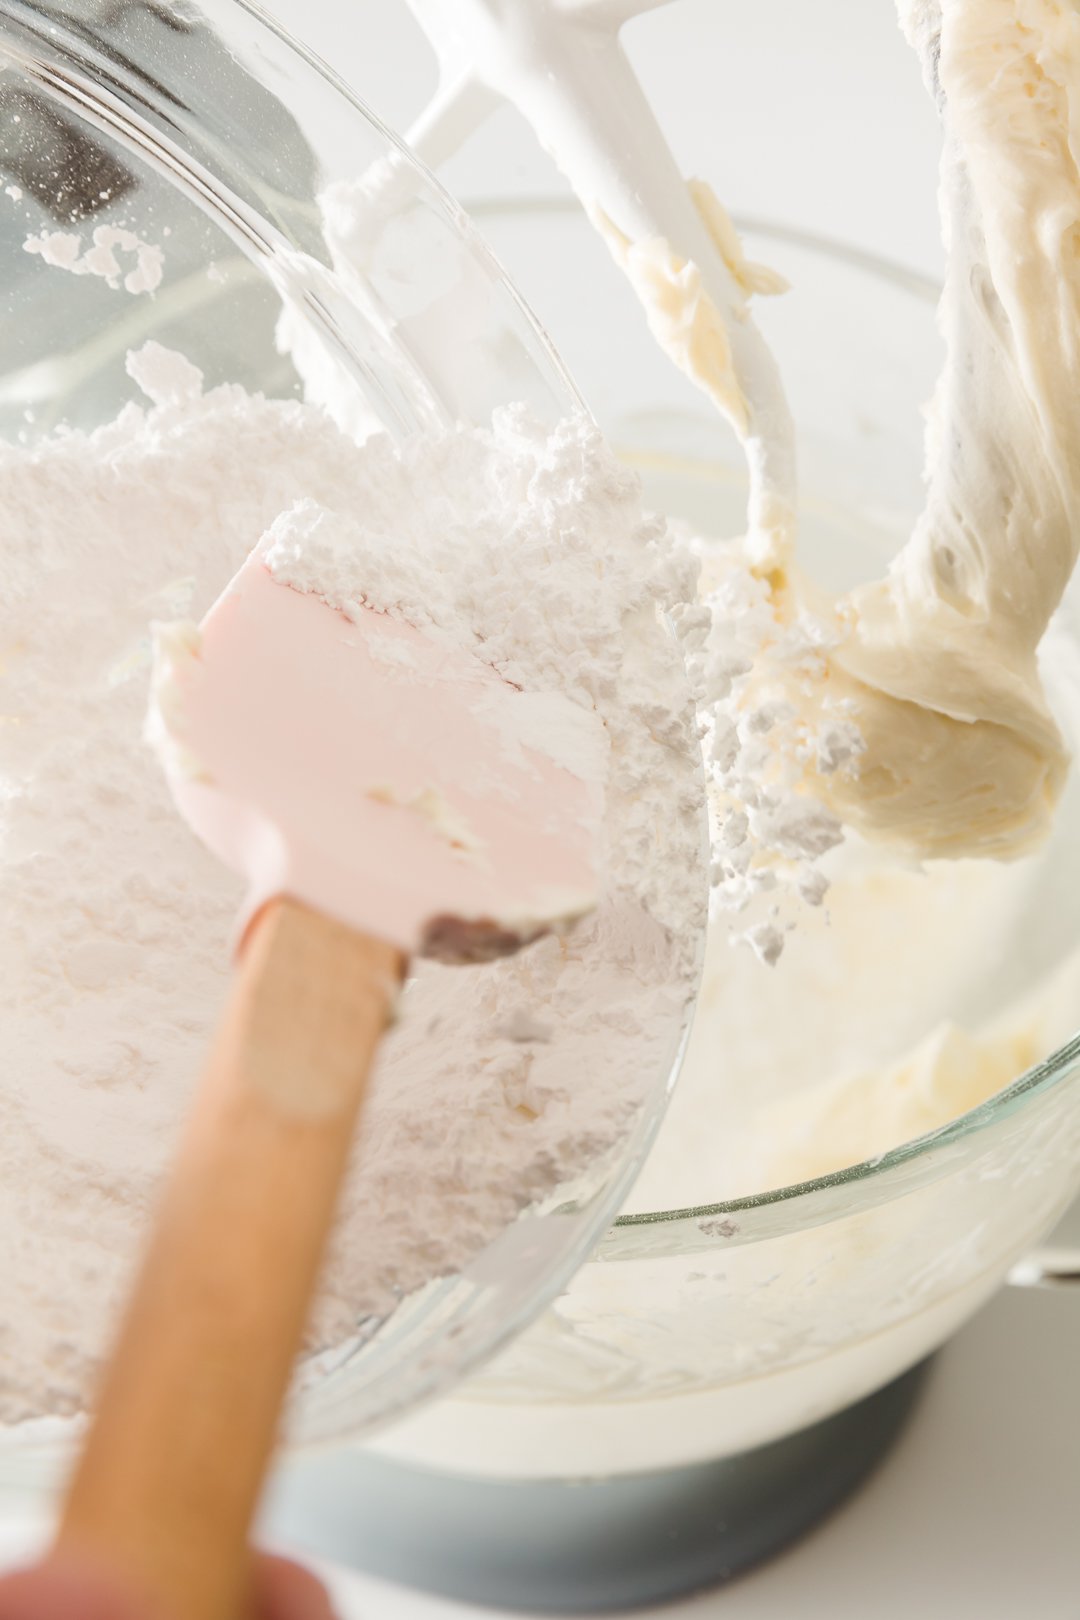 Adding powdered sugar to frosting recipe